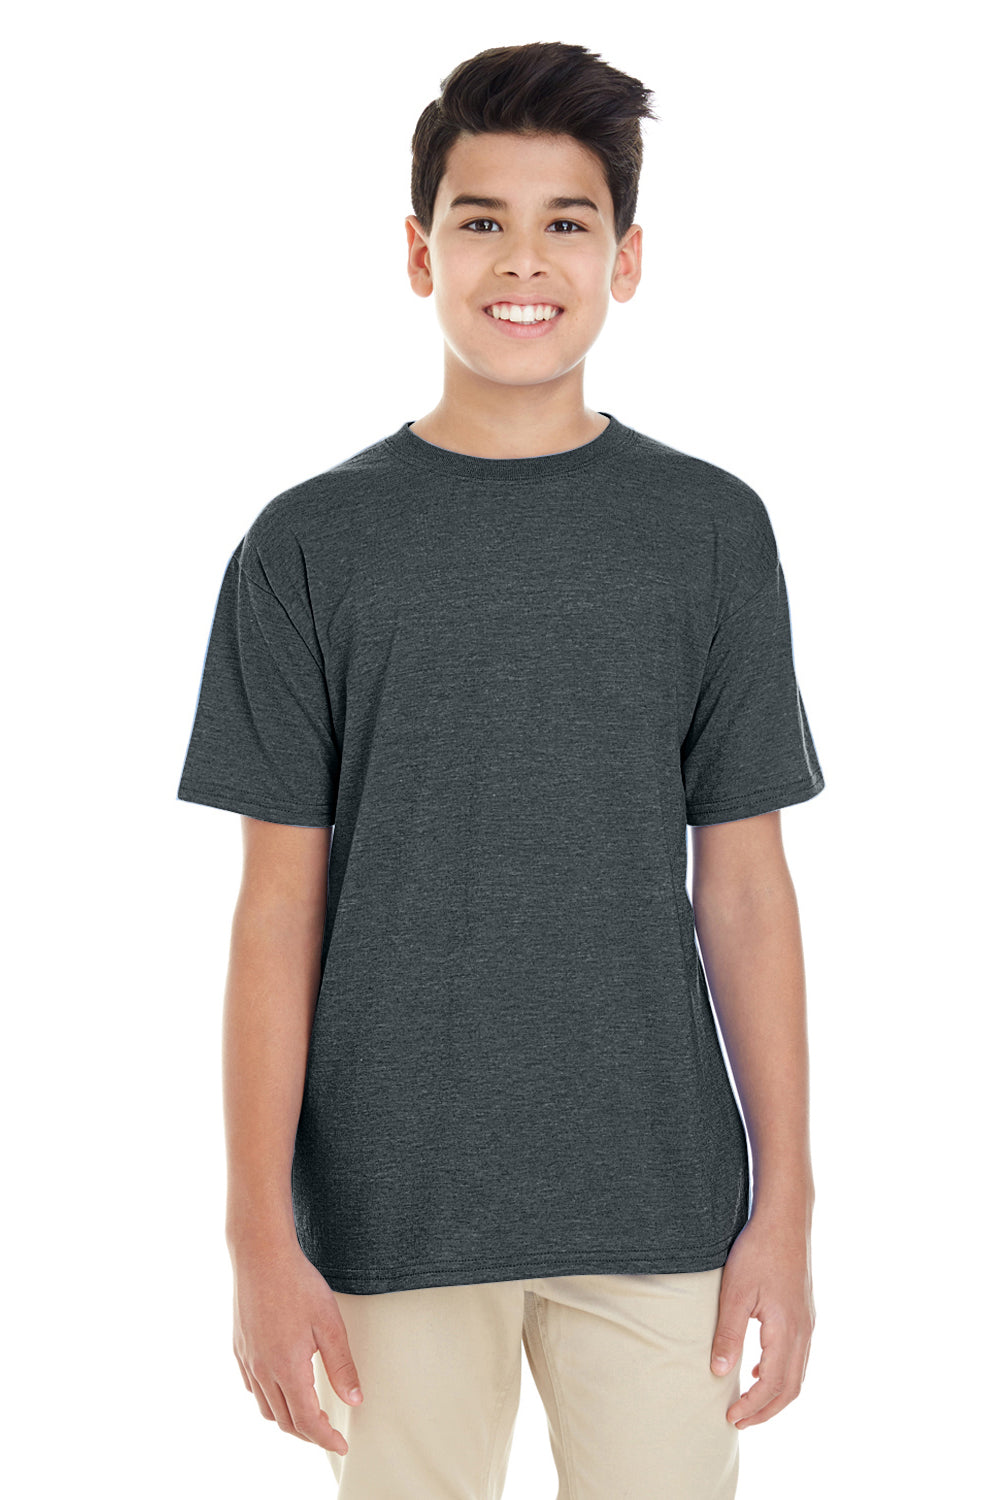 Gildan G645B Youth Softstyle Short Sleeve Crewneck T-Shirt Heather Dark Grey Front